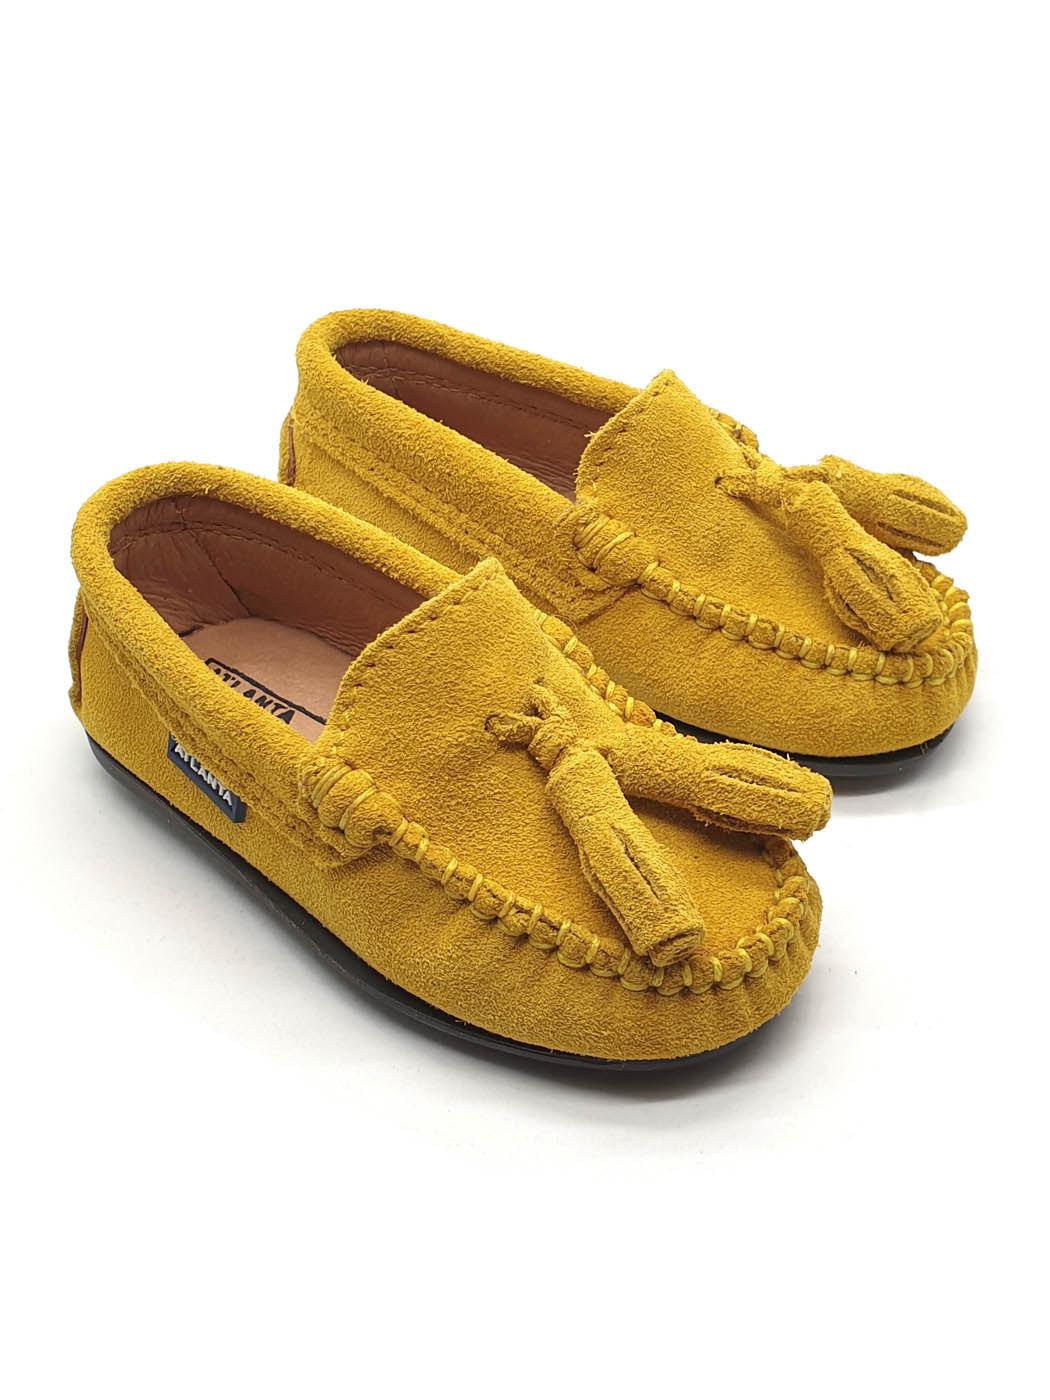 Atlanta Mocassin- Baby Shoes Moccasins Yellow-016G041